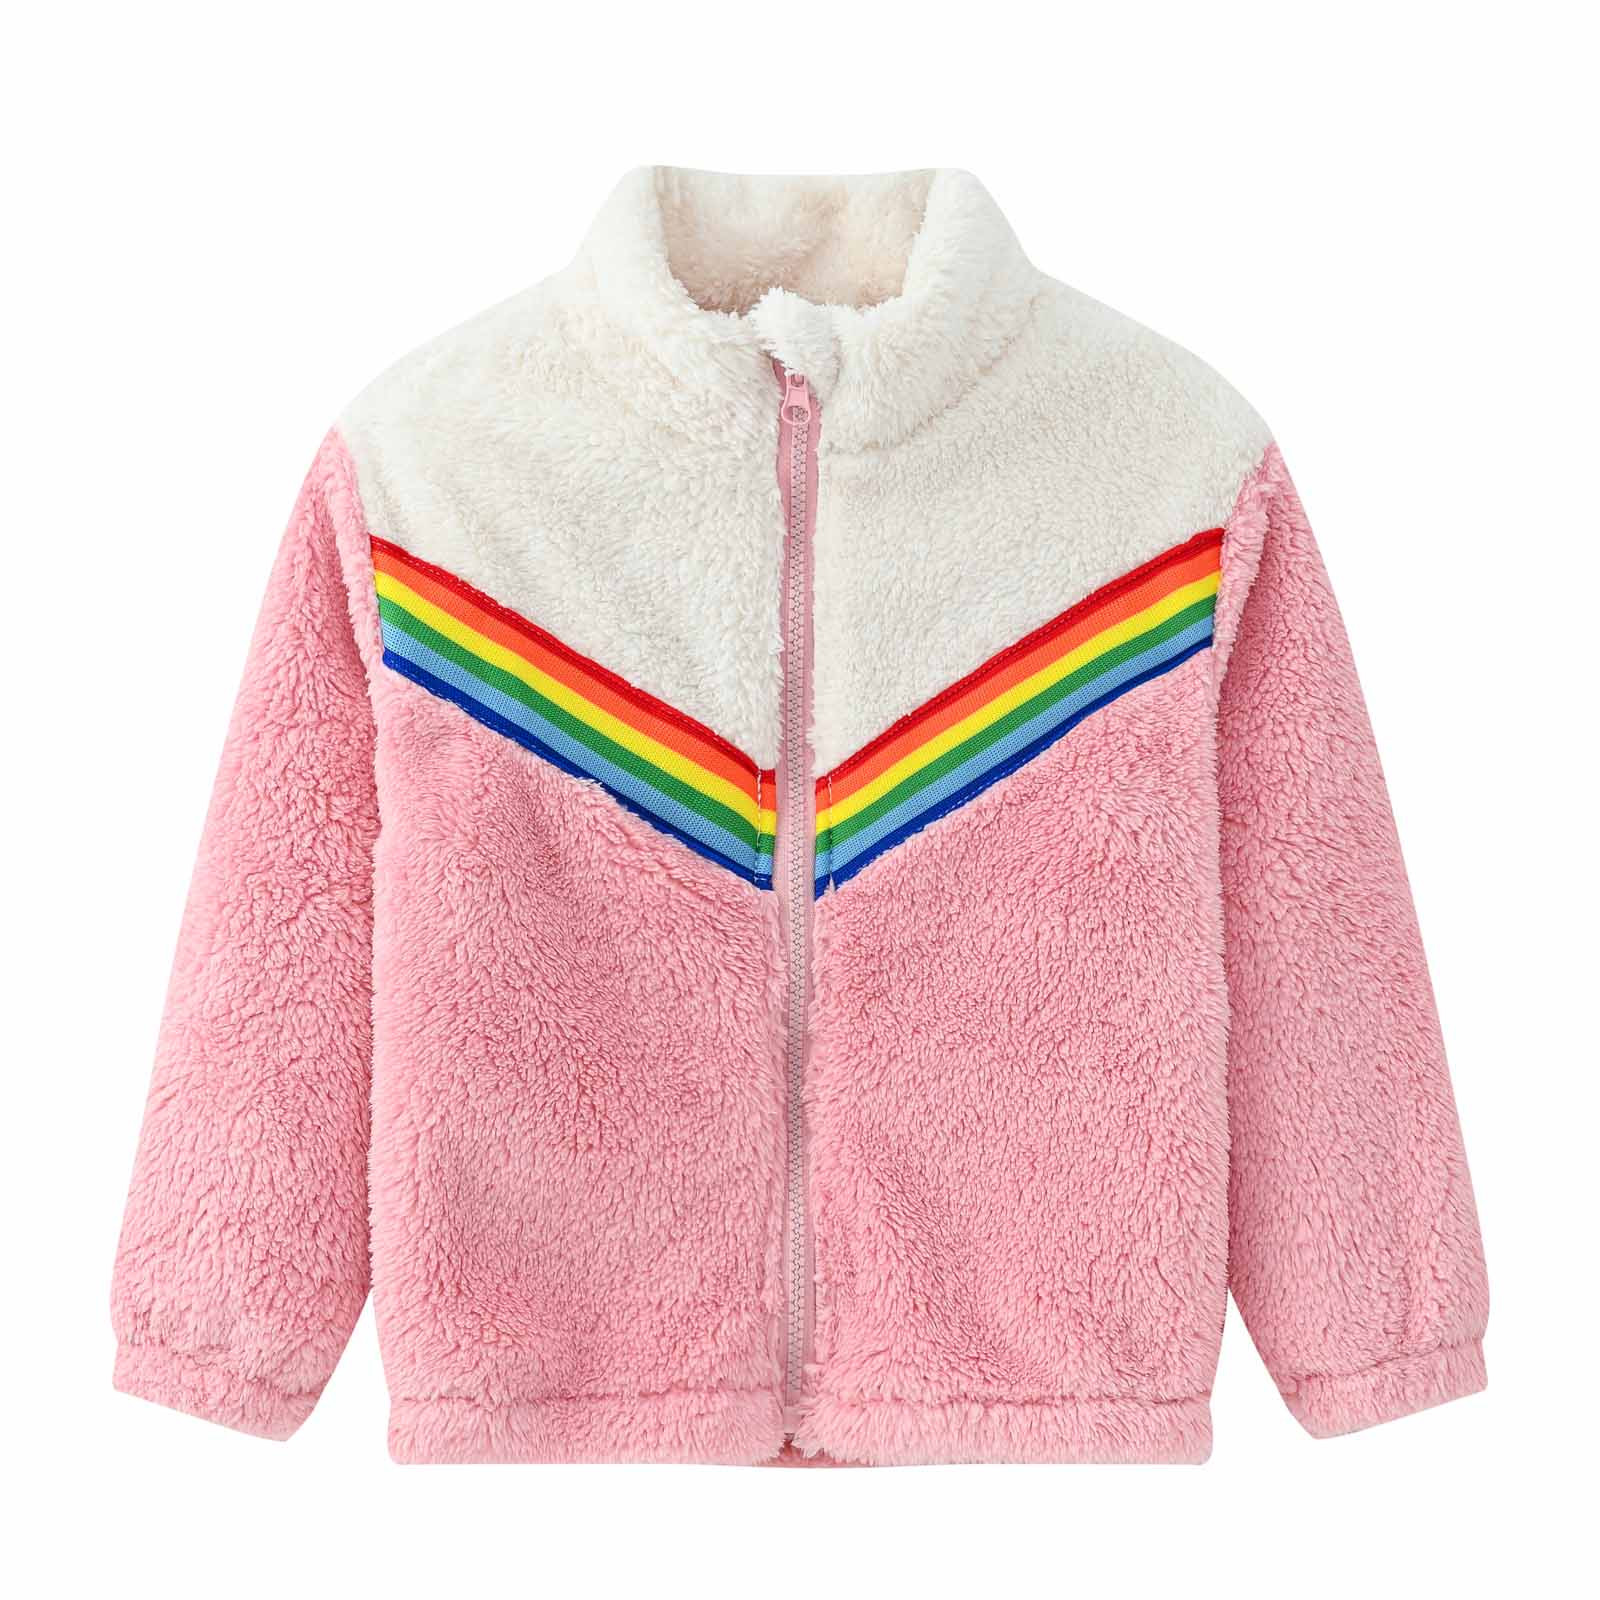 YYDGH Girls Zipper Jacket Fuzzy Sweatshirt Long Sleeve Casual Cozy Fleece Sherpa Outwear Coat Full-Zip Rainbow Jackets(Pink,2-3 Years) - image 1 of 8